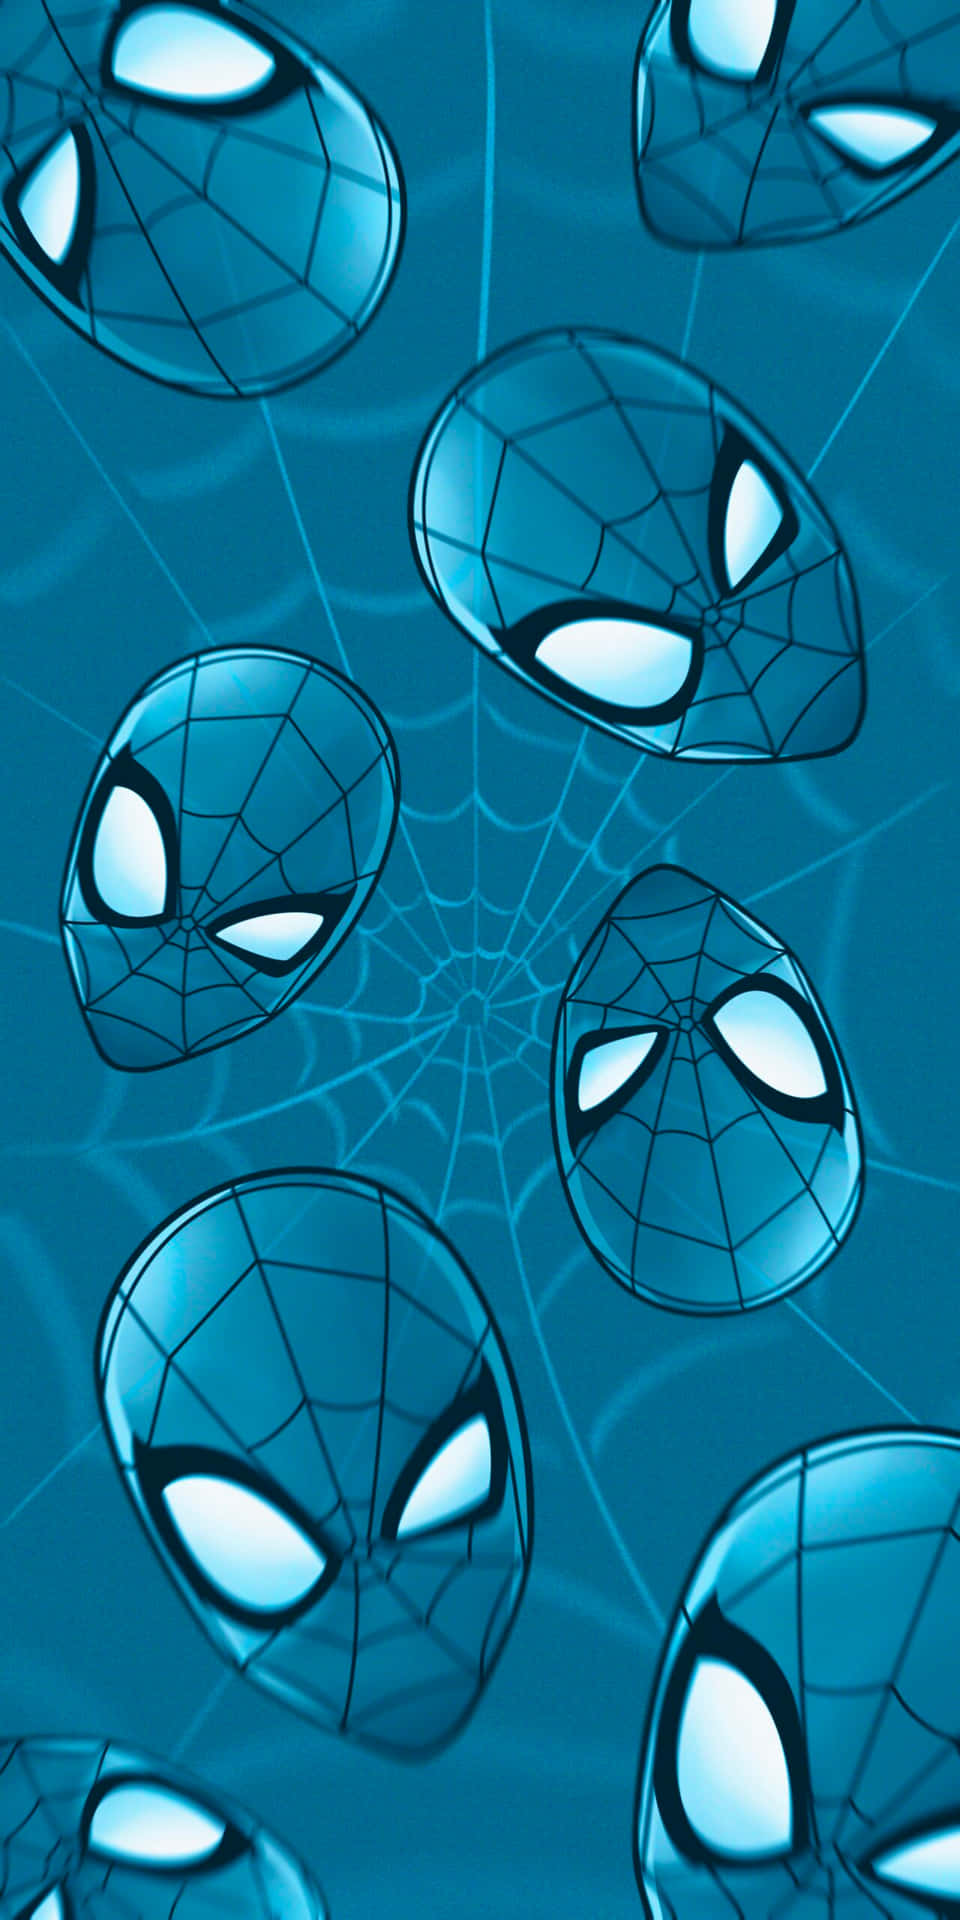 Spider Man's Head Wallpaper